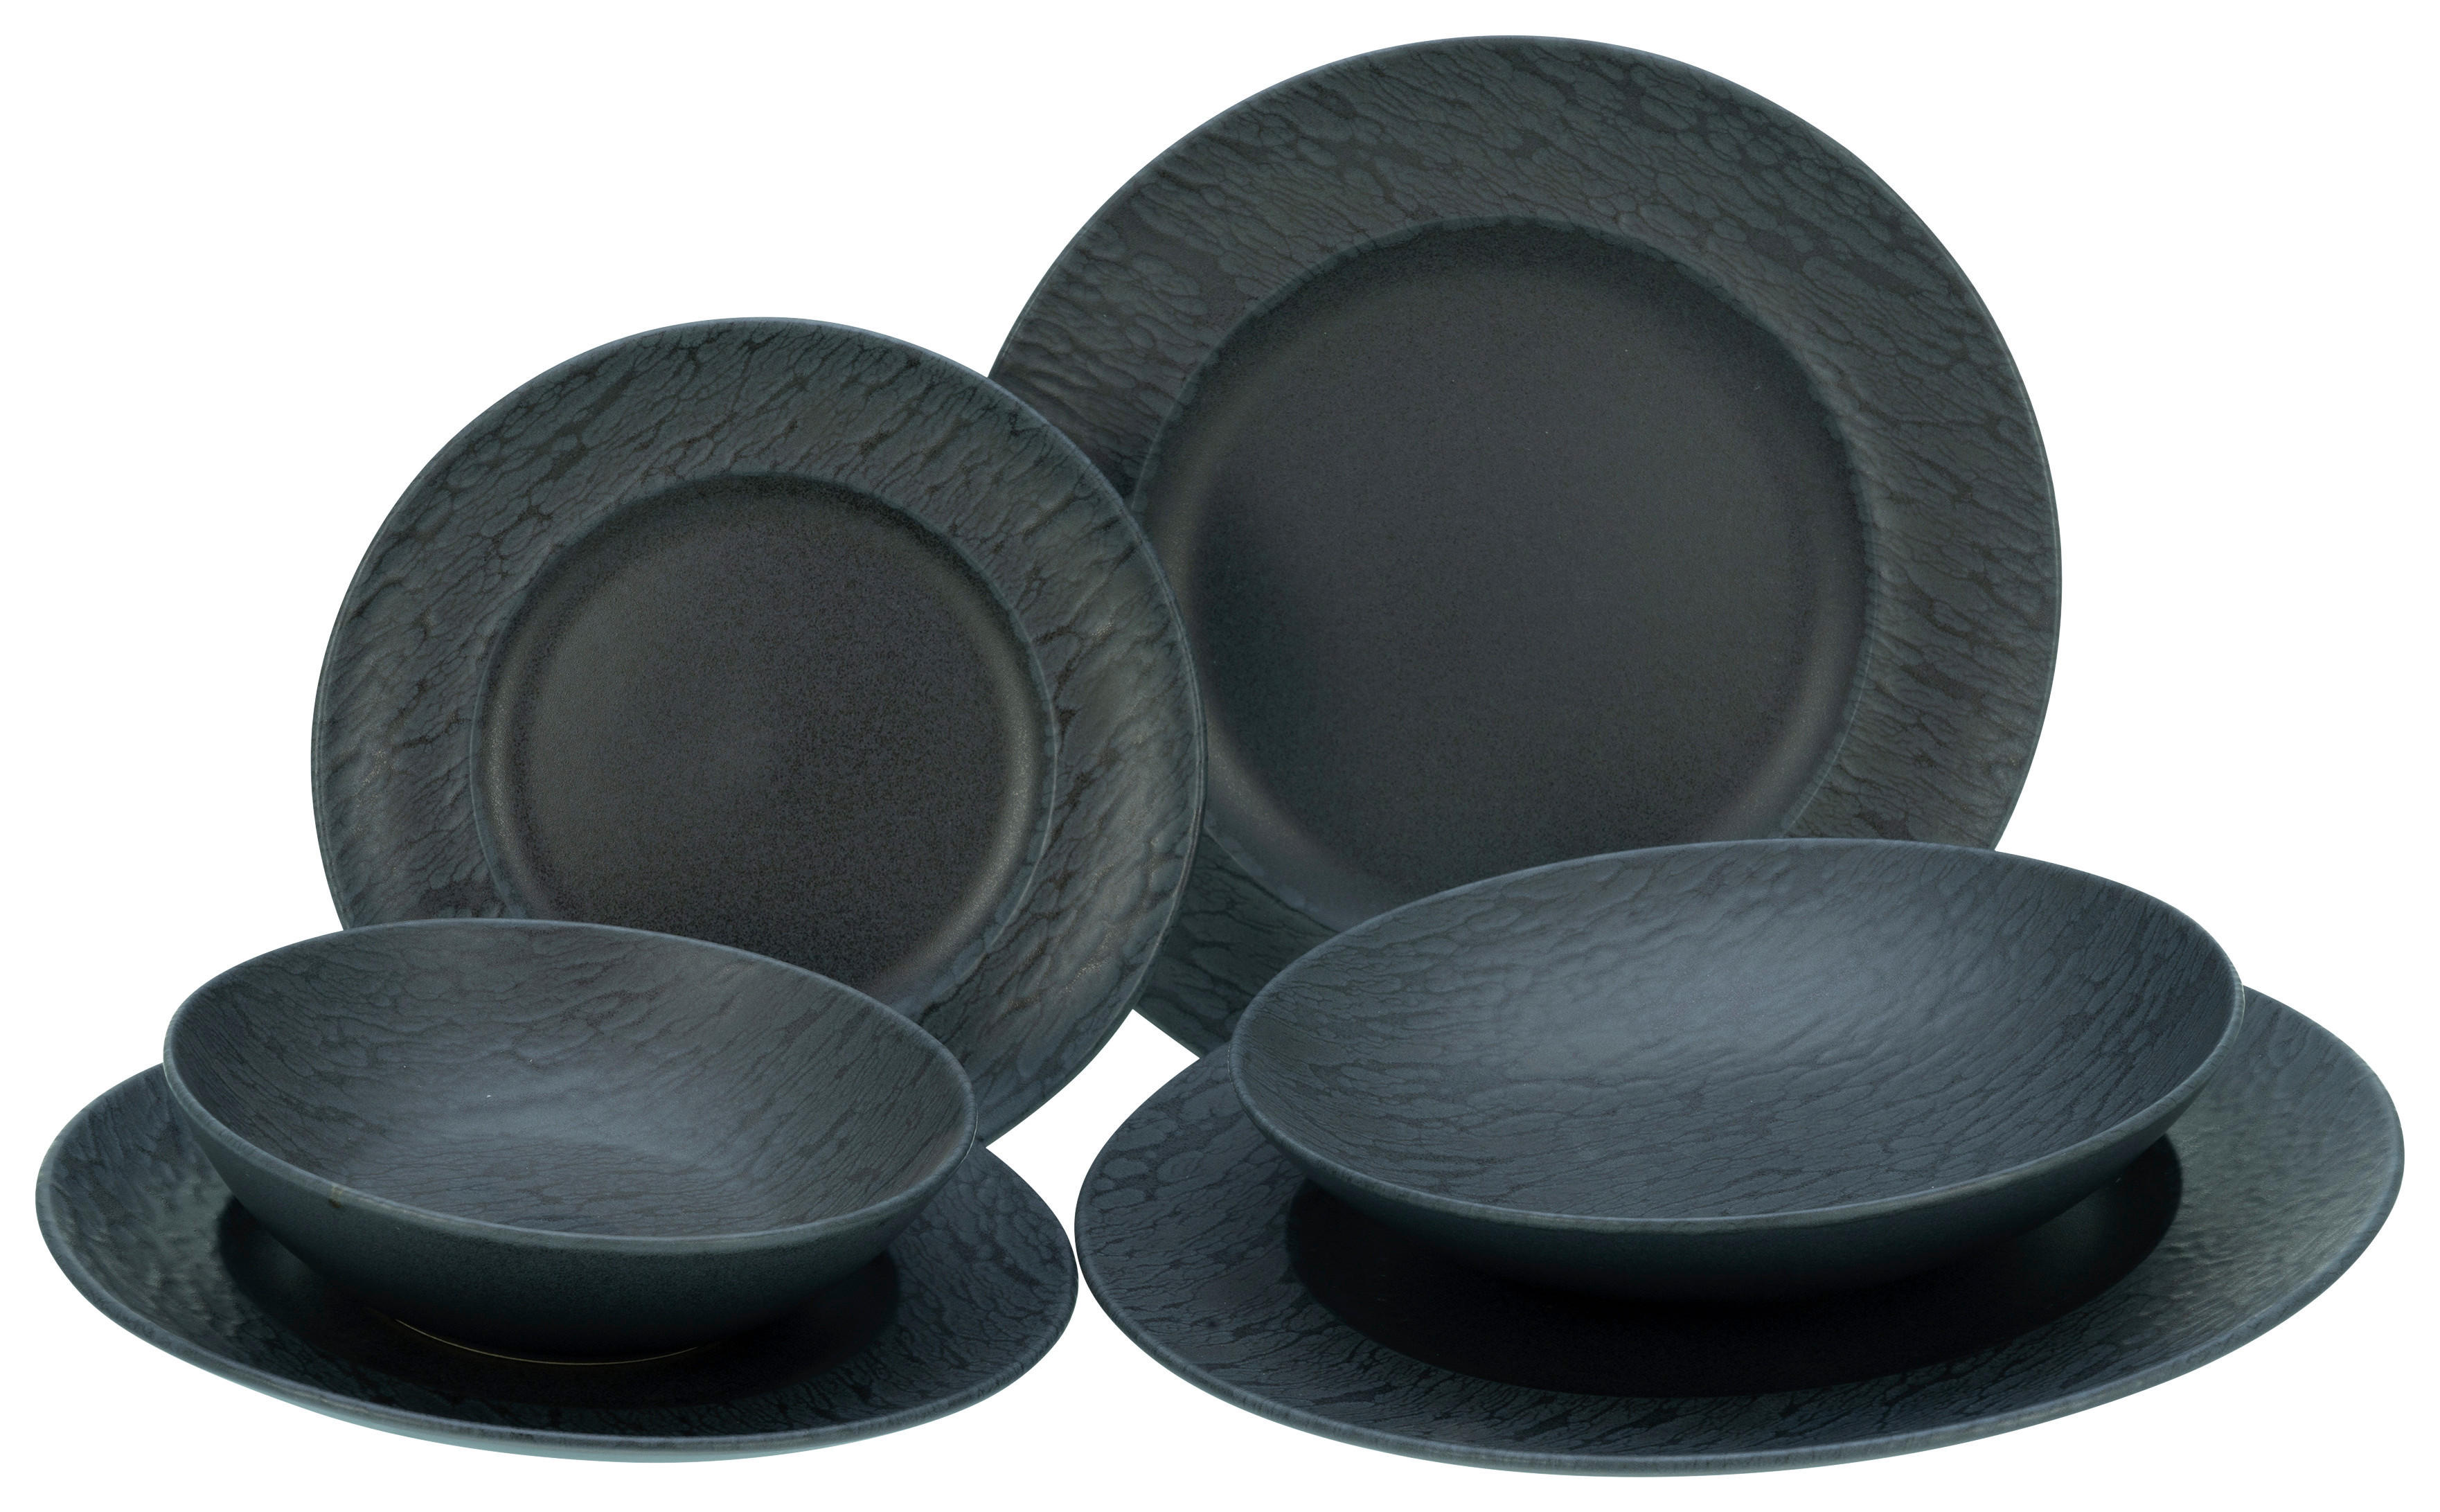 CreaTable Tellerset Rondo Black Schiefer schwarz Keramik 12 tlg. Rondo Black Schiefer - schwarz (40,00/43,00/37,00cm) - CreaTable